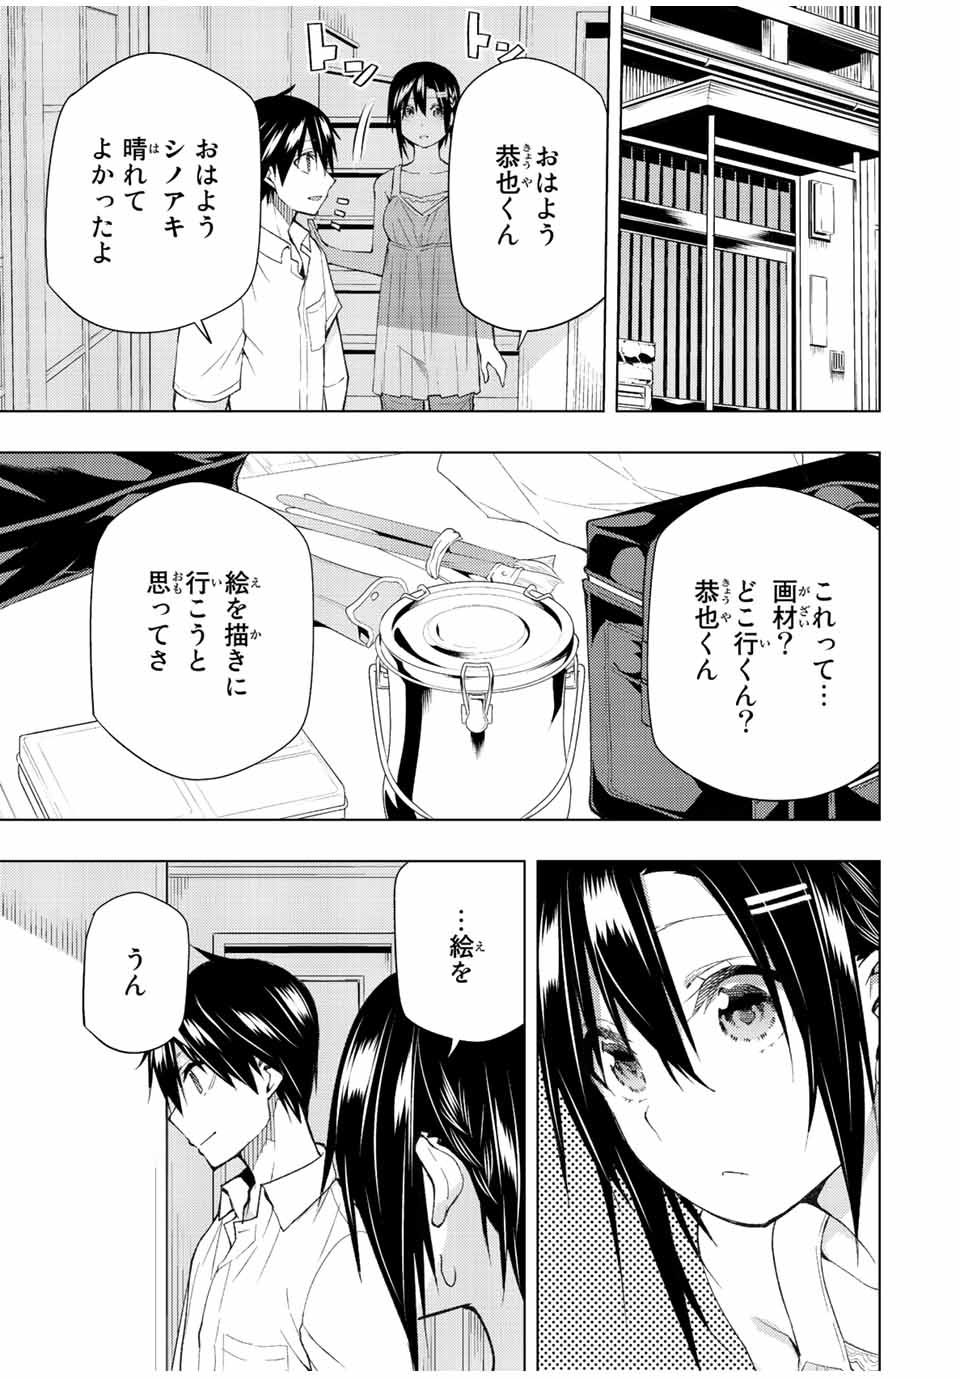 Bokutachi no Remake - Chapter 35.2 - Page 1